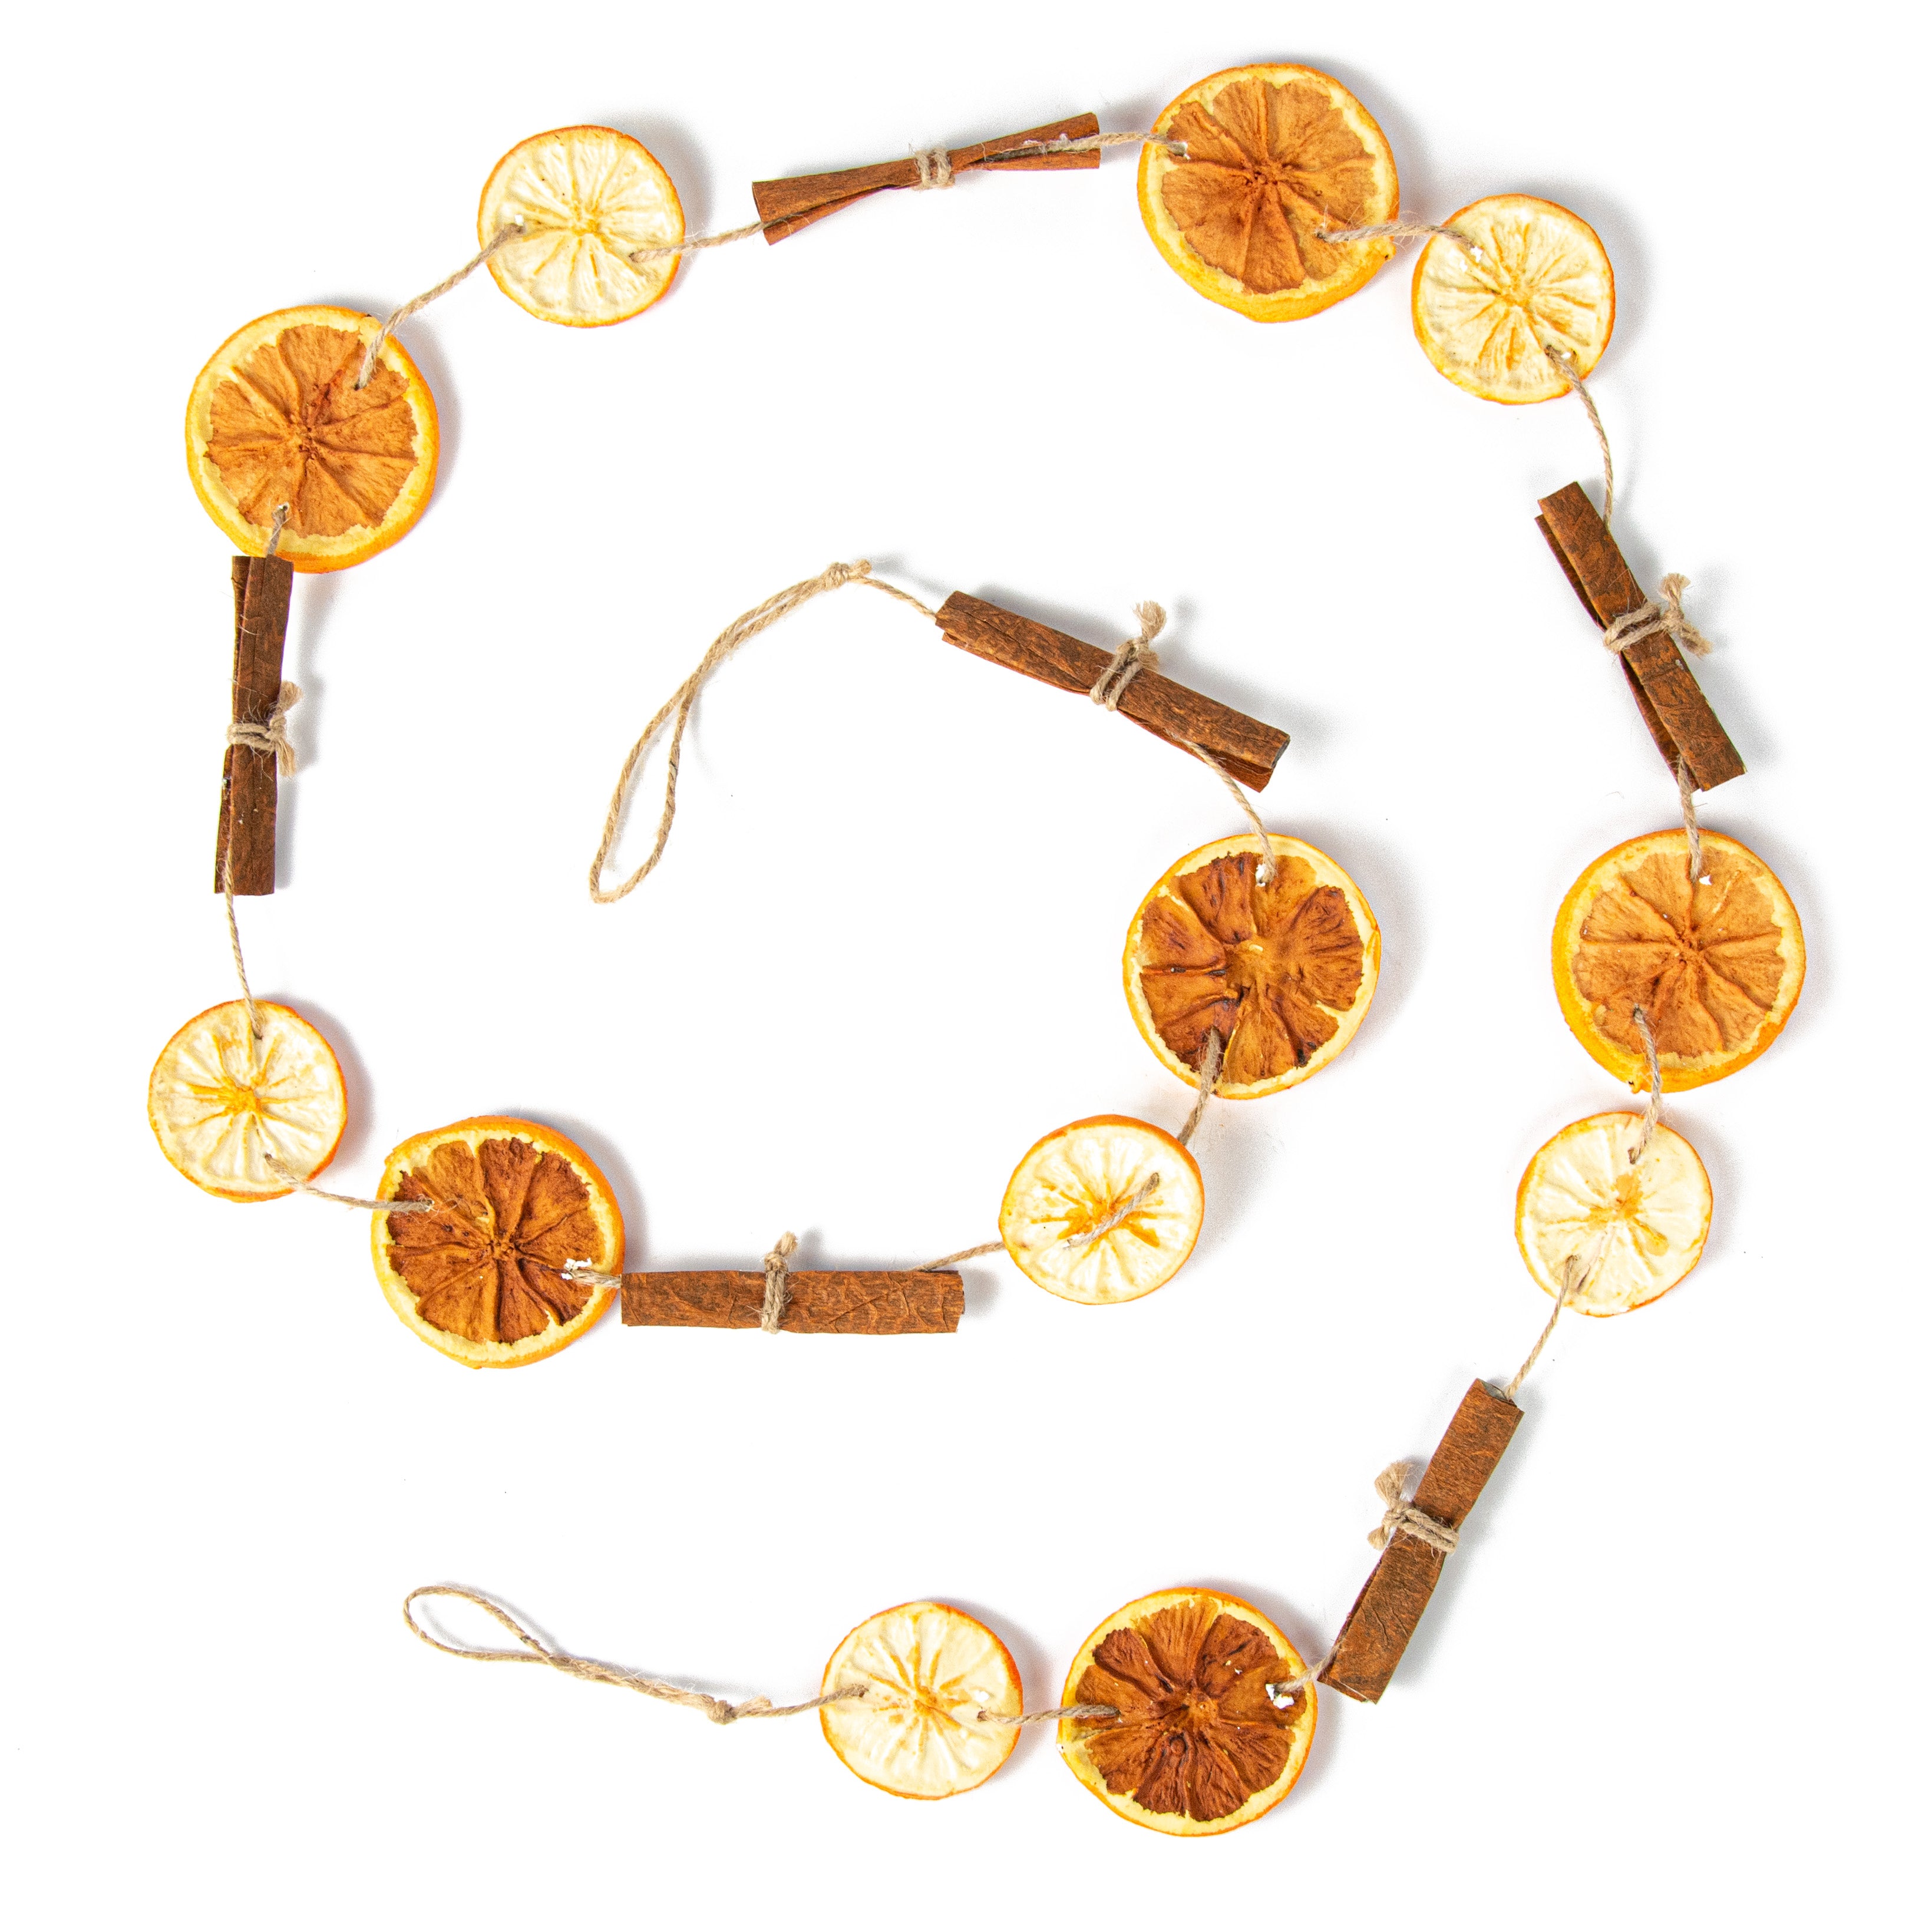 5' Dried Orange, Lemon, Cinnamon Spice Garland